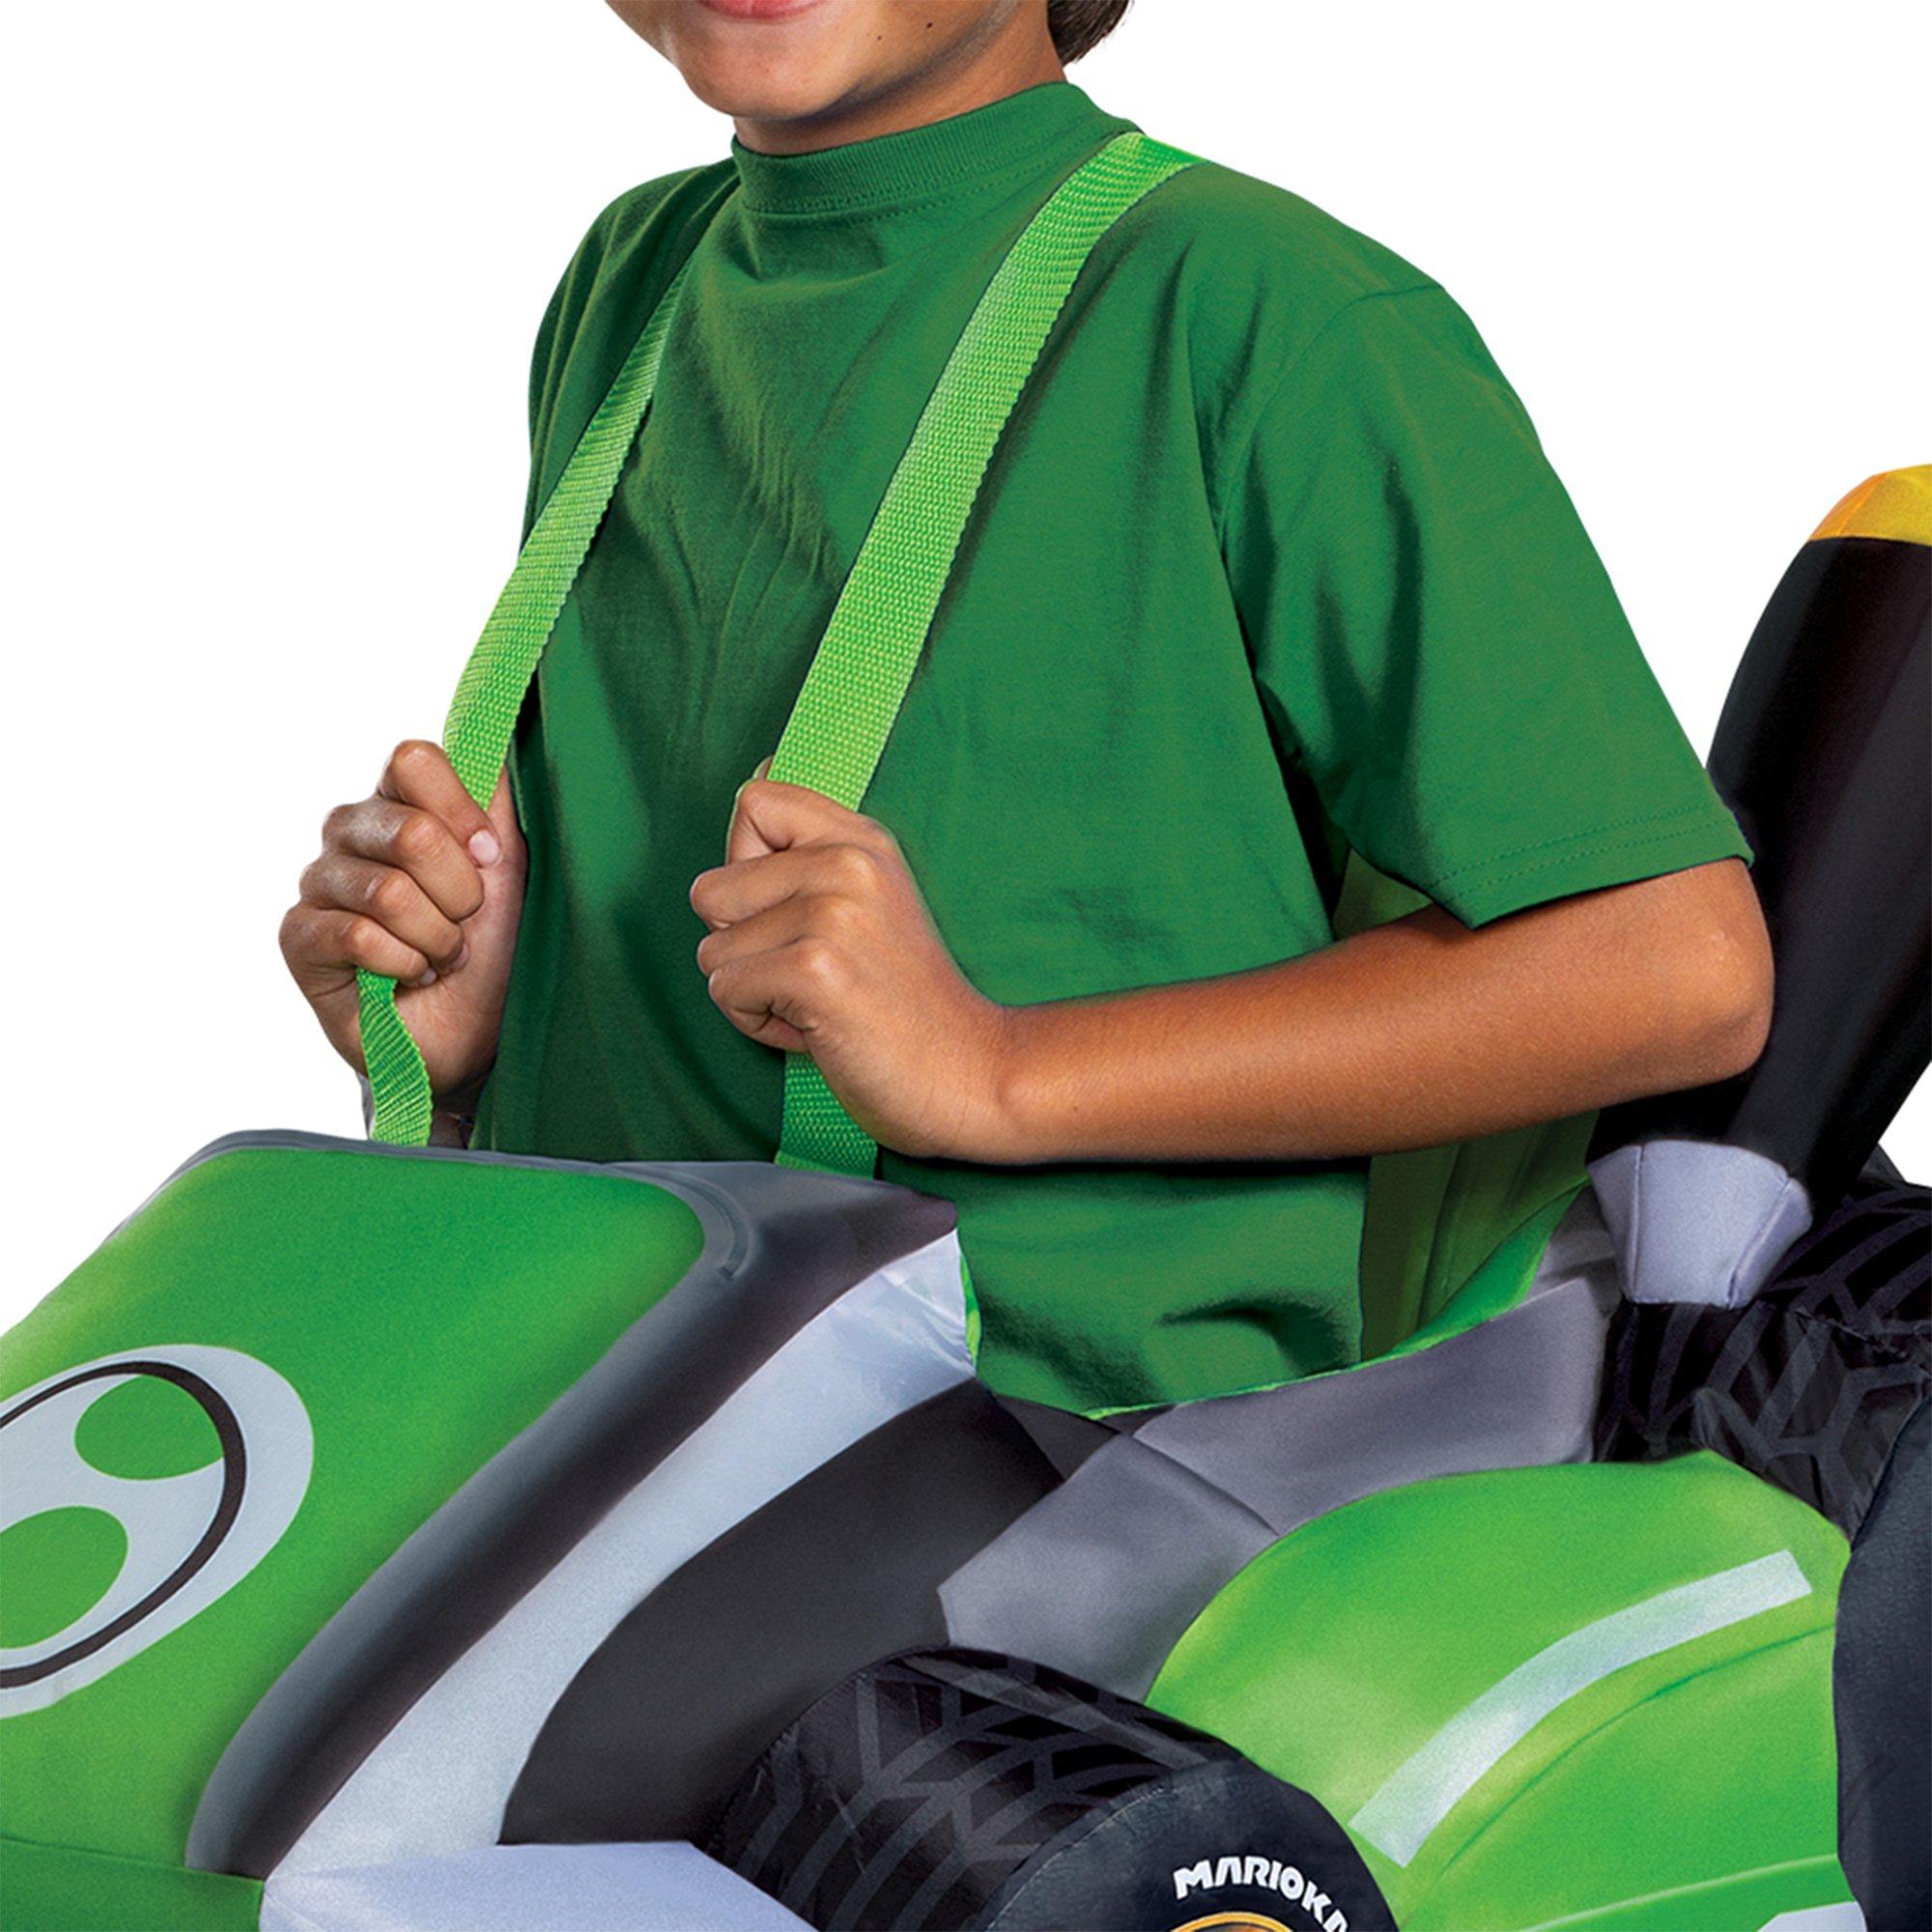 Kids' Yoshi Kart Ride-On Inflatable Costume - Mario Kart